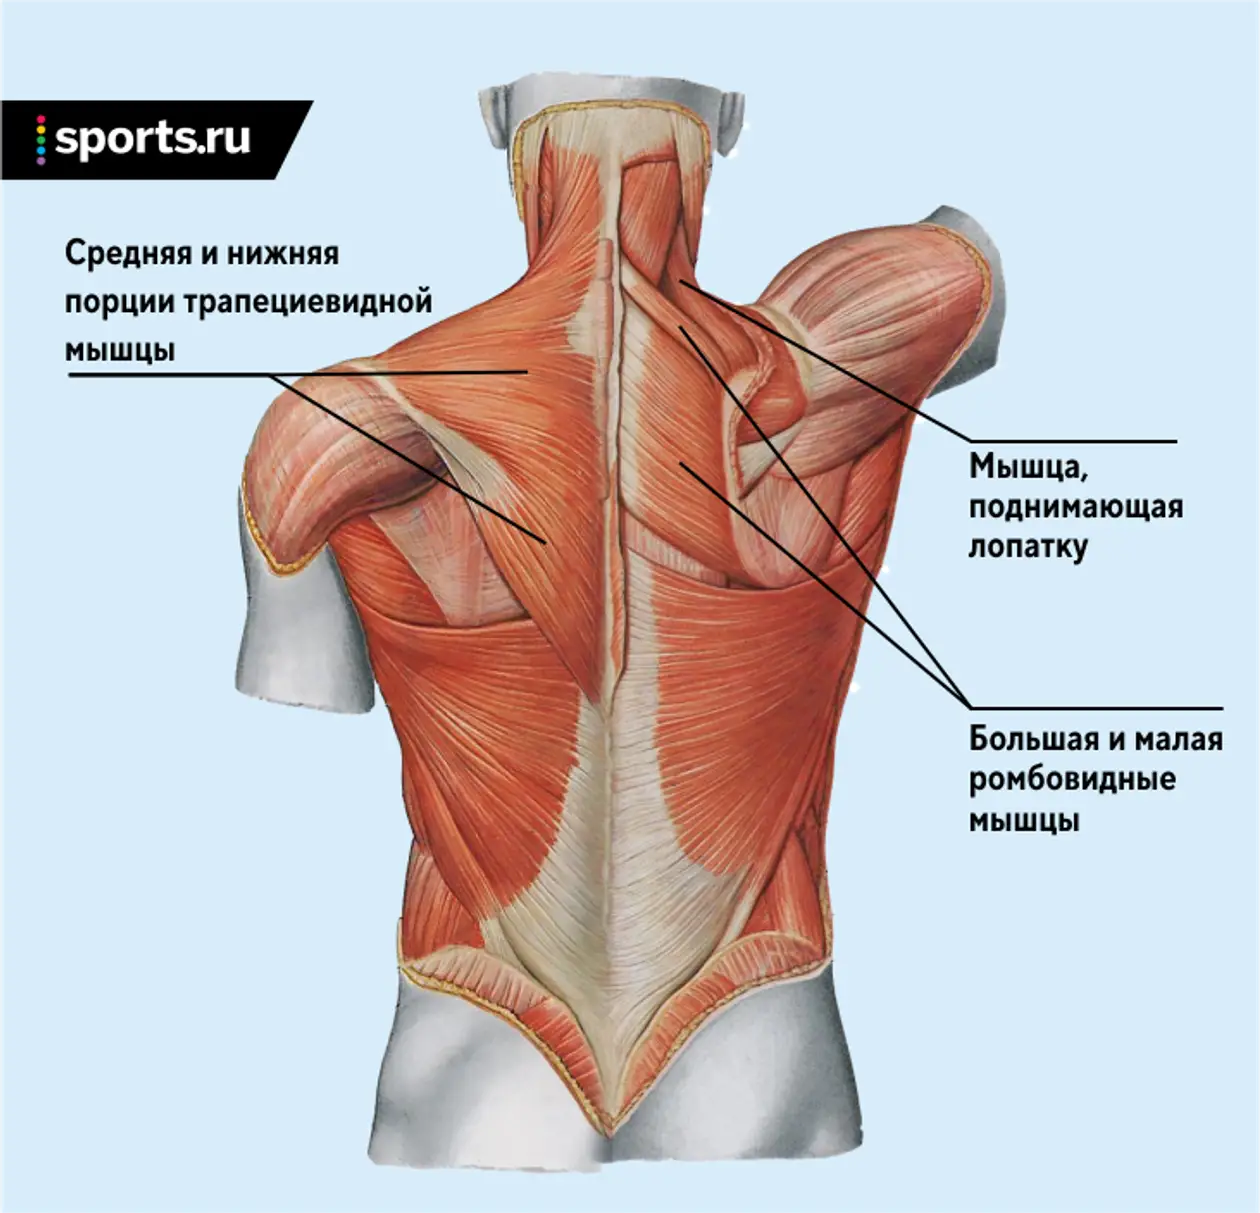 Трапециевидная мышца спины функции. Трапециевидная мышца спины анатомия. Трапециевидные мышцы верхняя средняя нижняя. Мышца поднимающая лопатку. Части поясницы